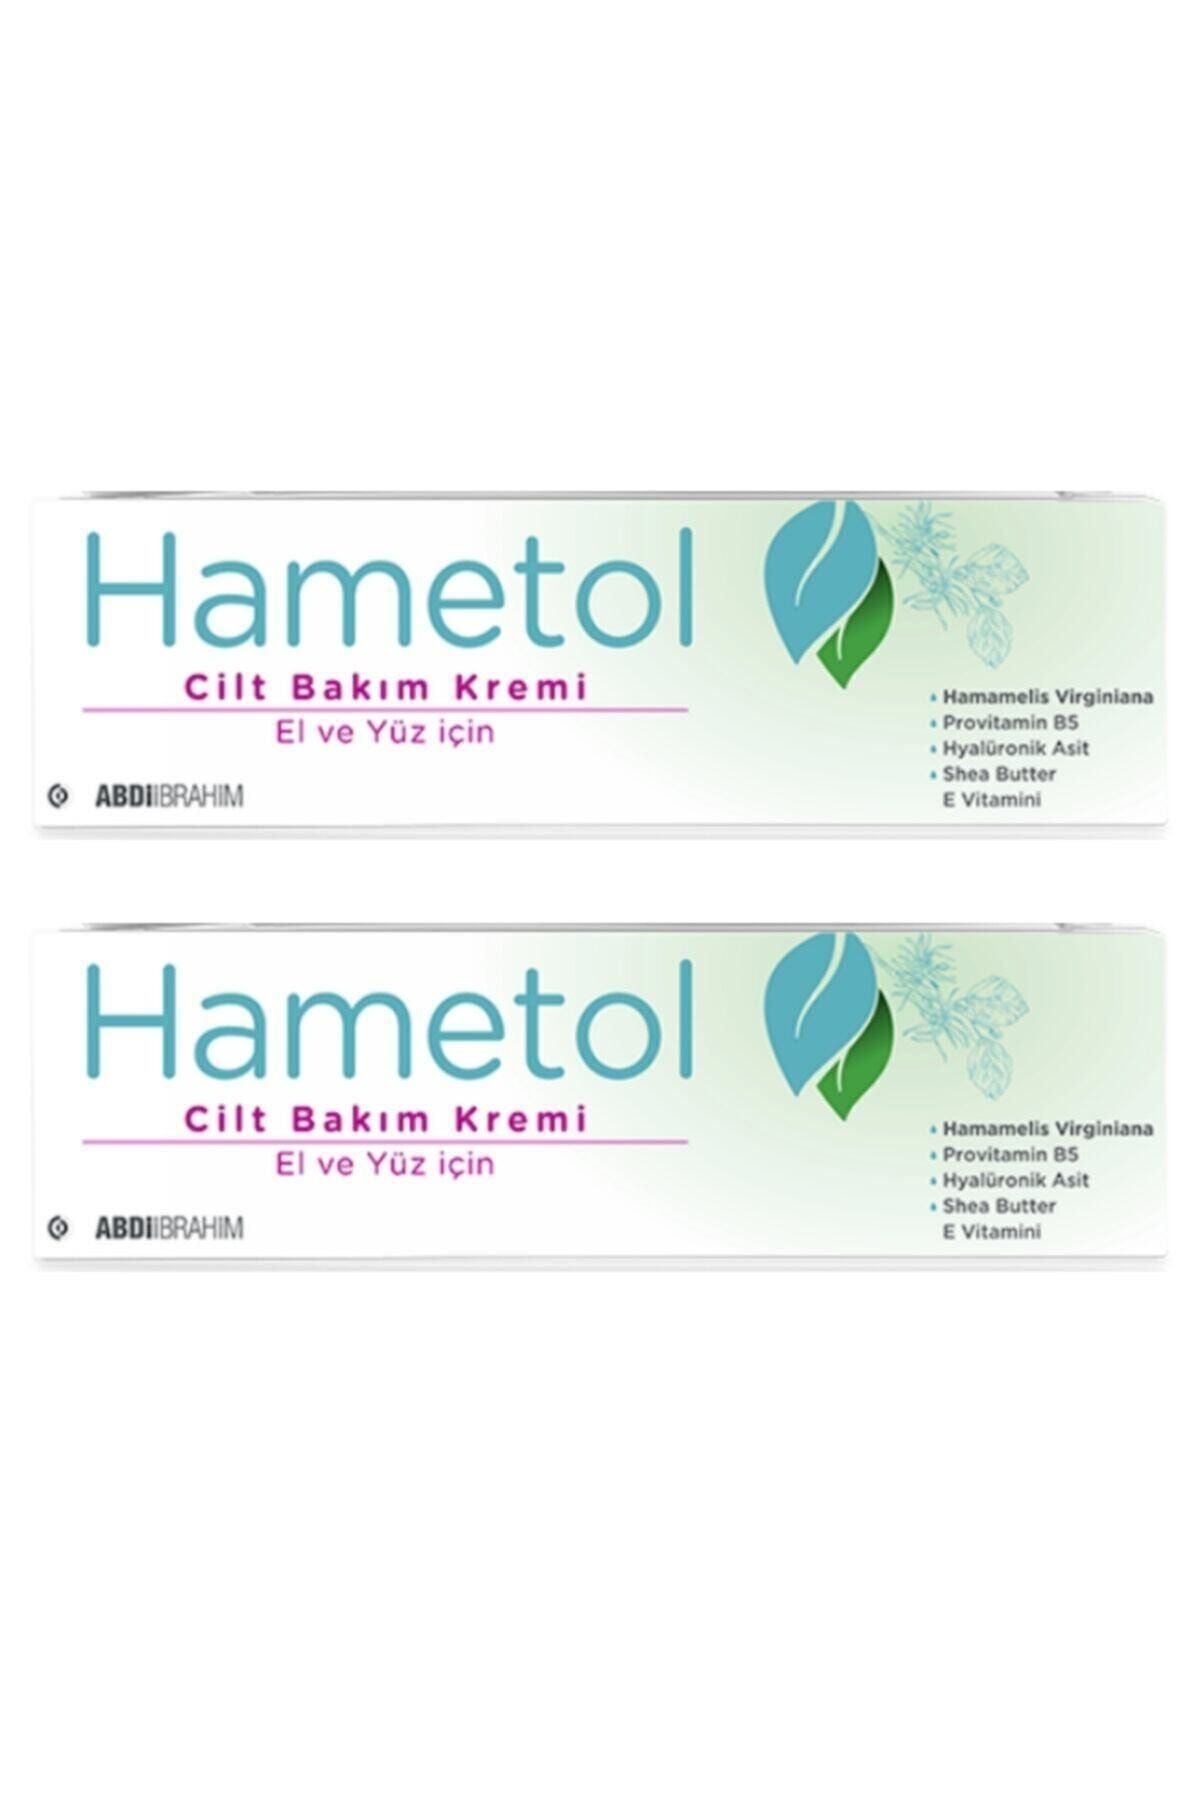 Hametol Cilt Bakım Kremi 30 gr (2 Kutu) 10528699514350156